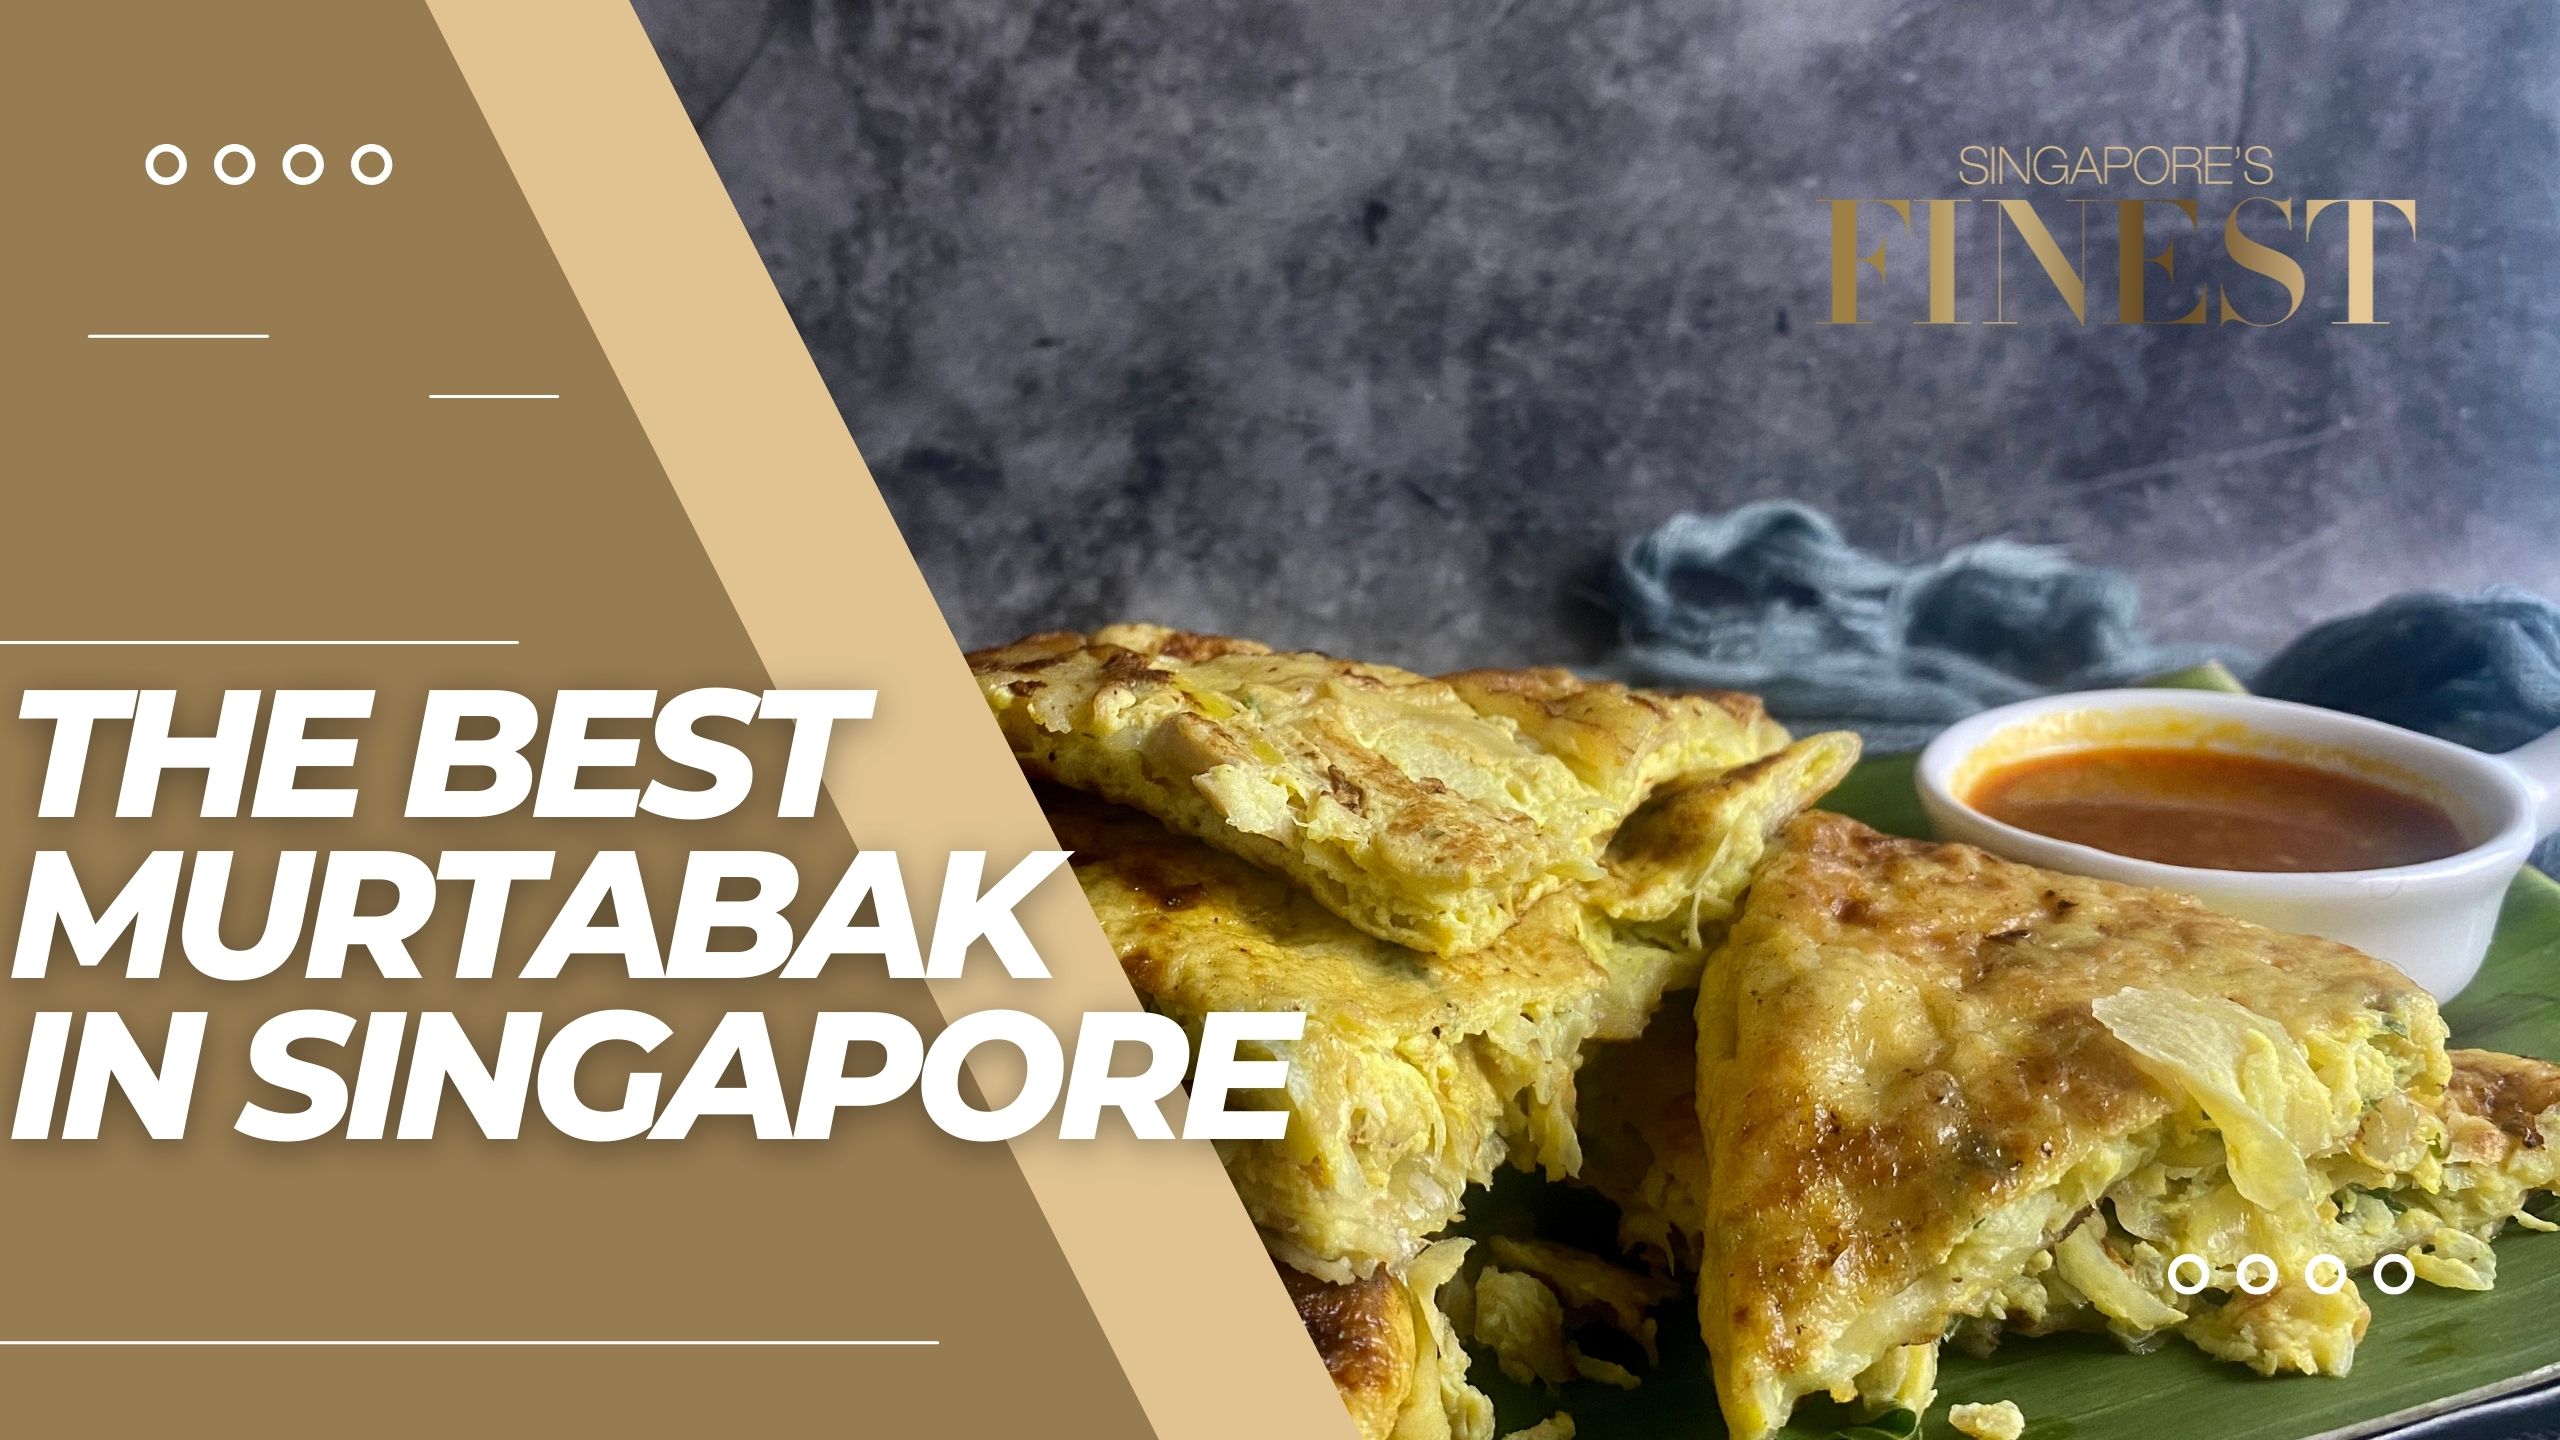 The Finest Murtabak in Singapore